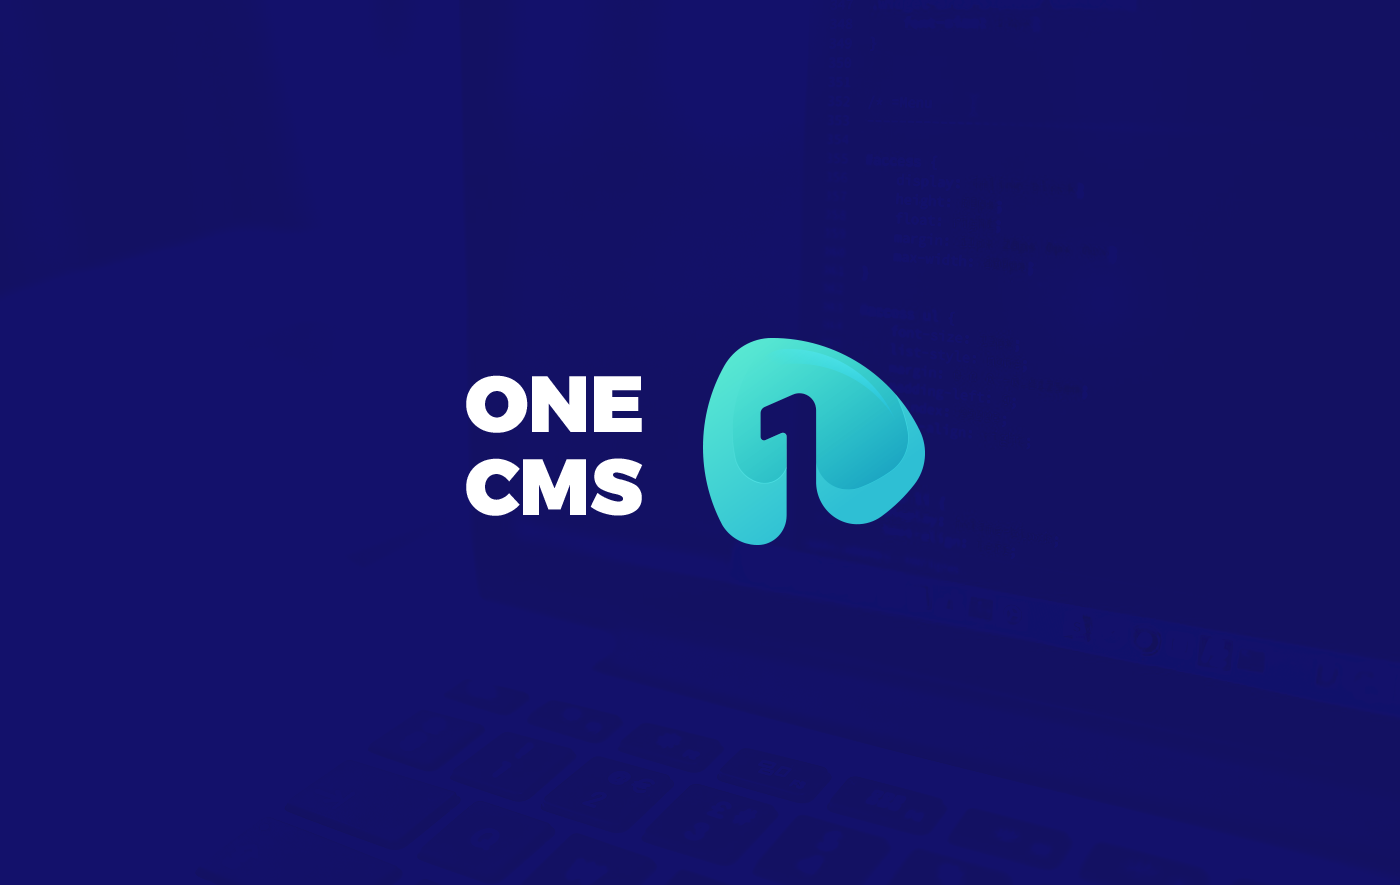 One CMS Brand Identity Design